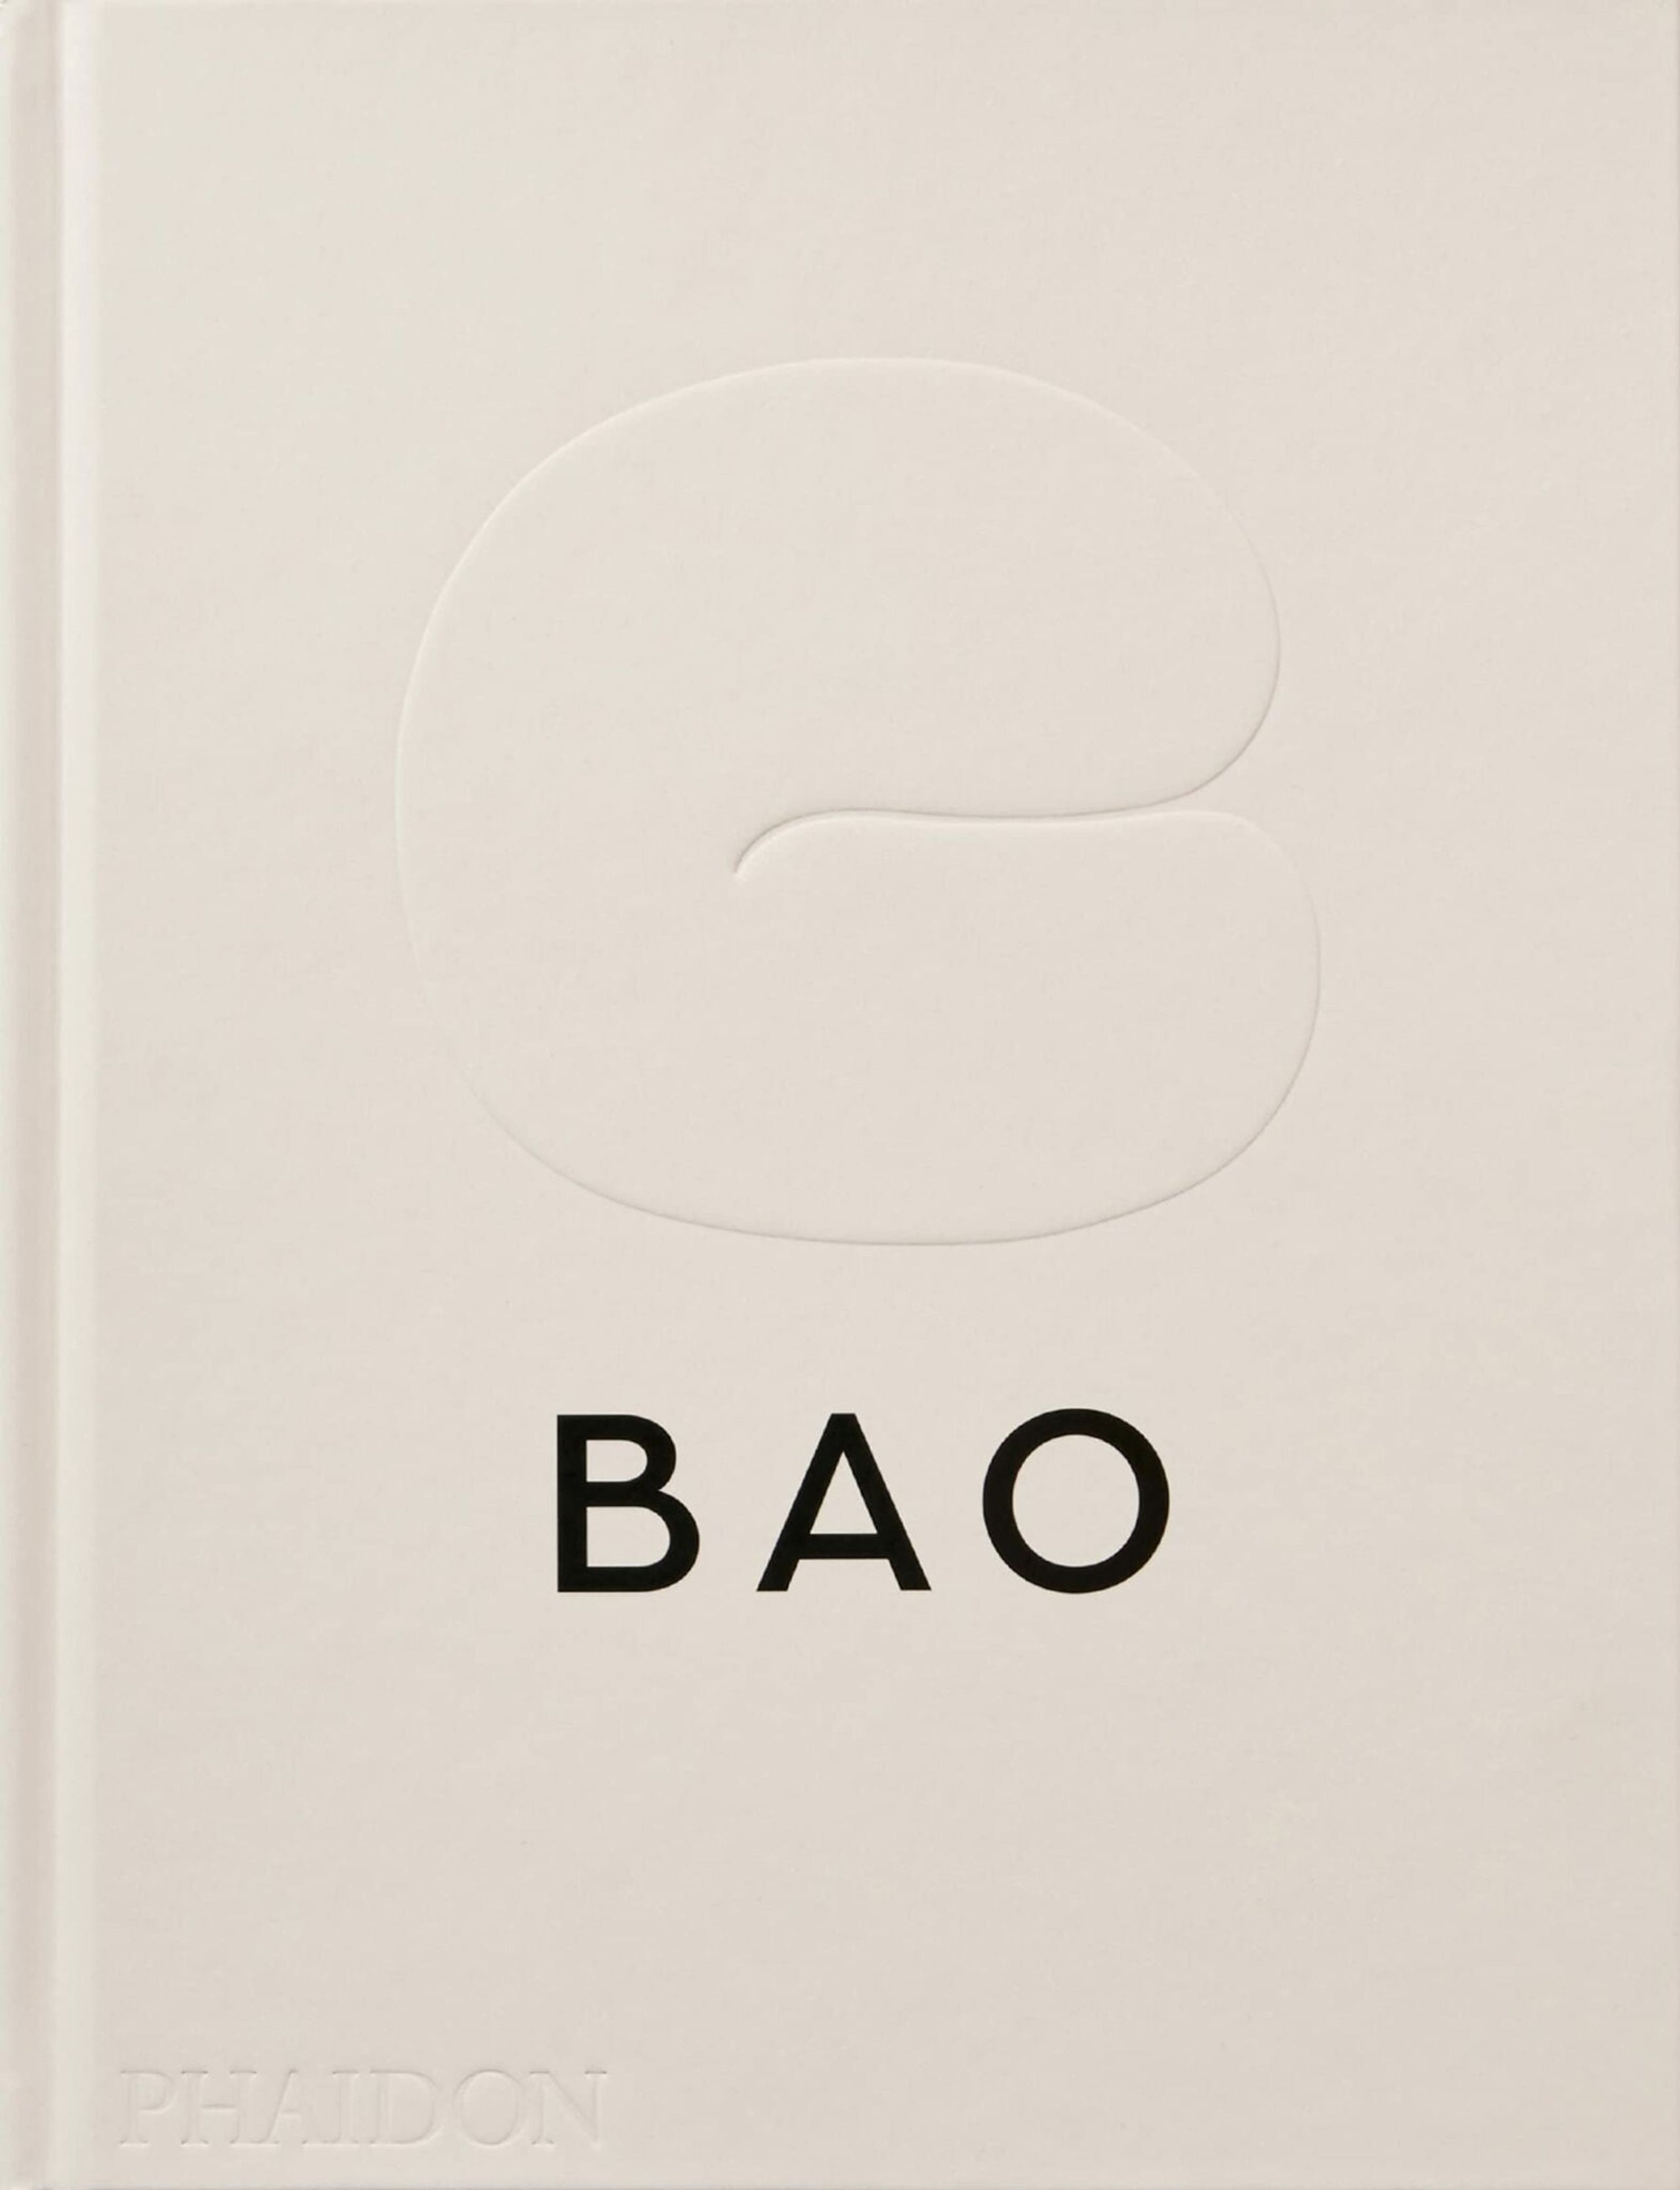 New Mags - Buch - Bao - White